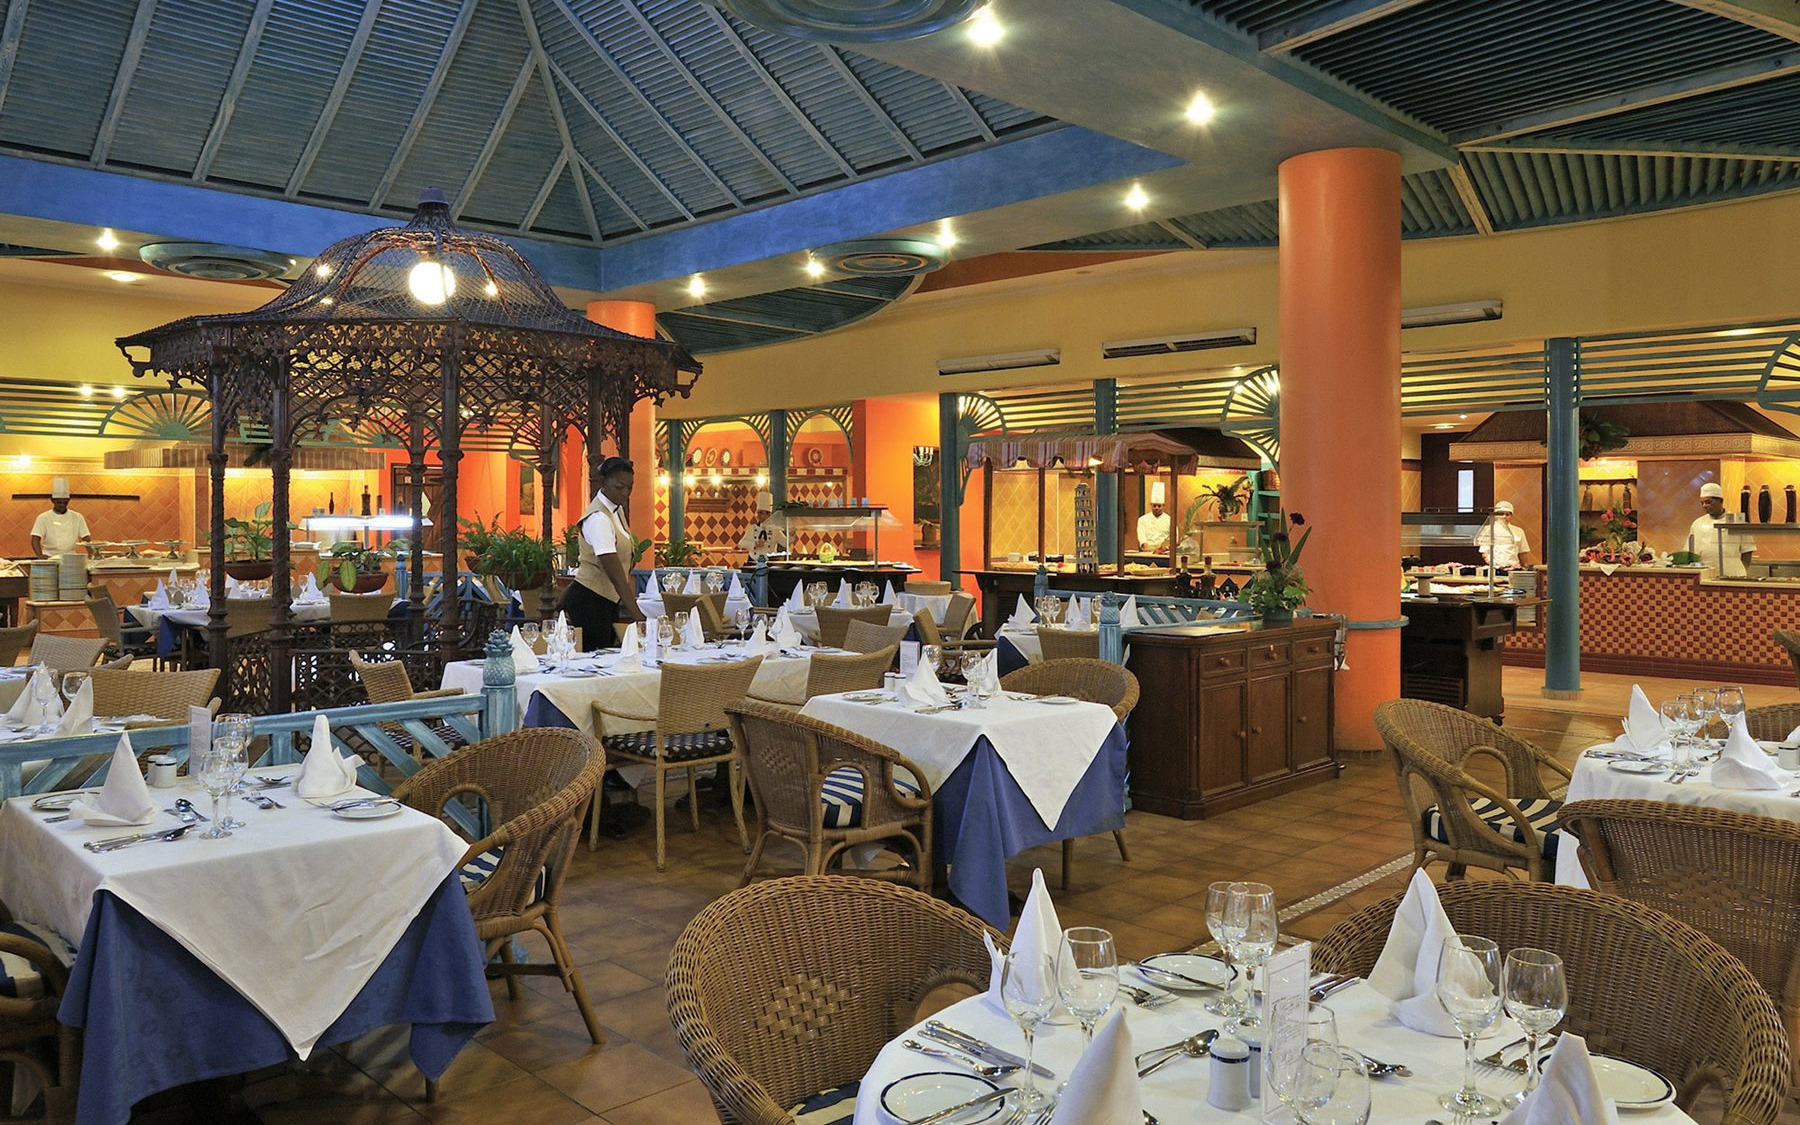 Restaurant La Casona